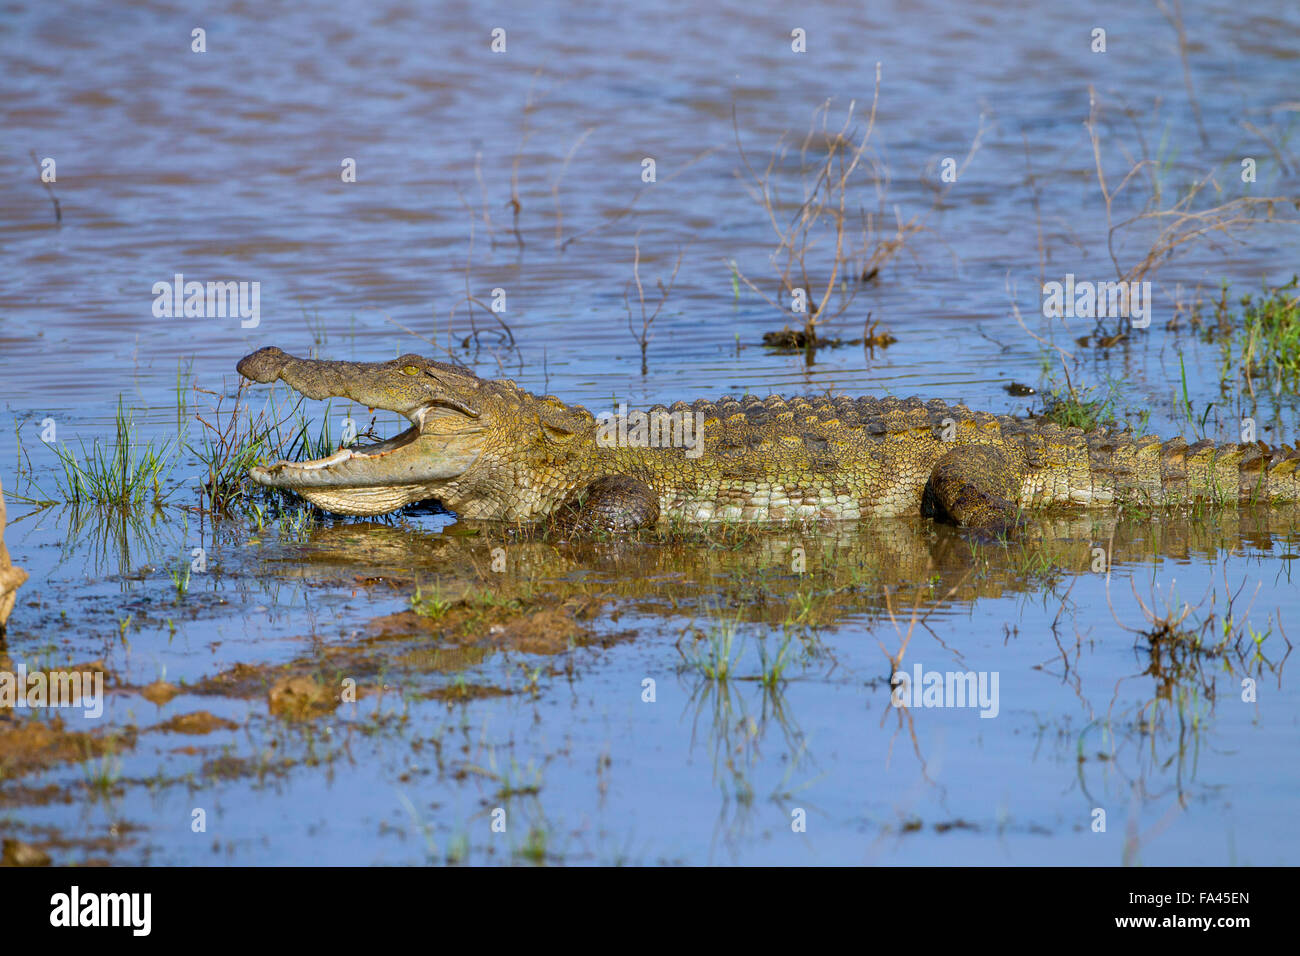 Crocodylinae Crocodile Parc national de Yala au Sri Lanka Banque D'Images